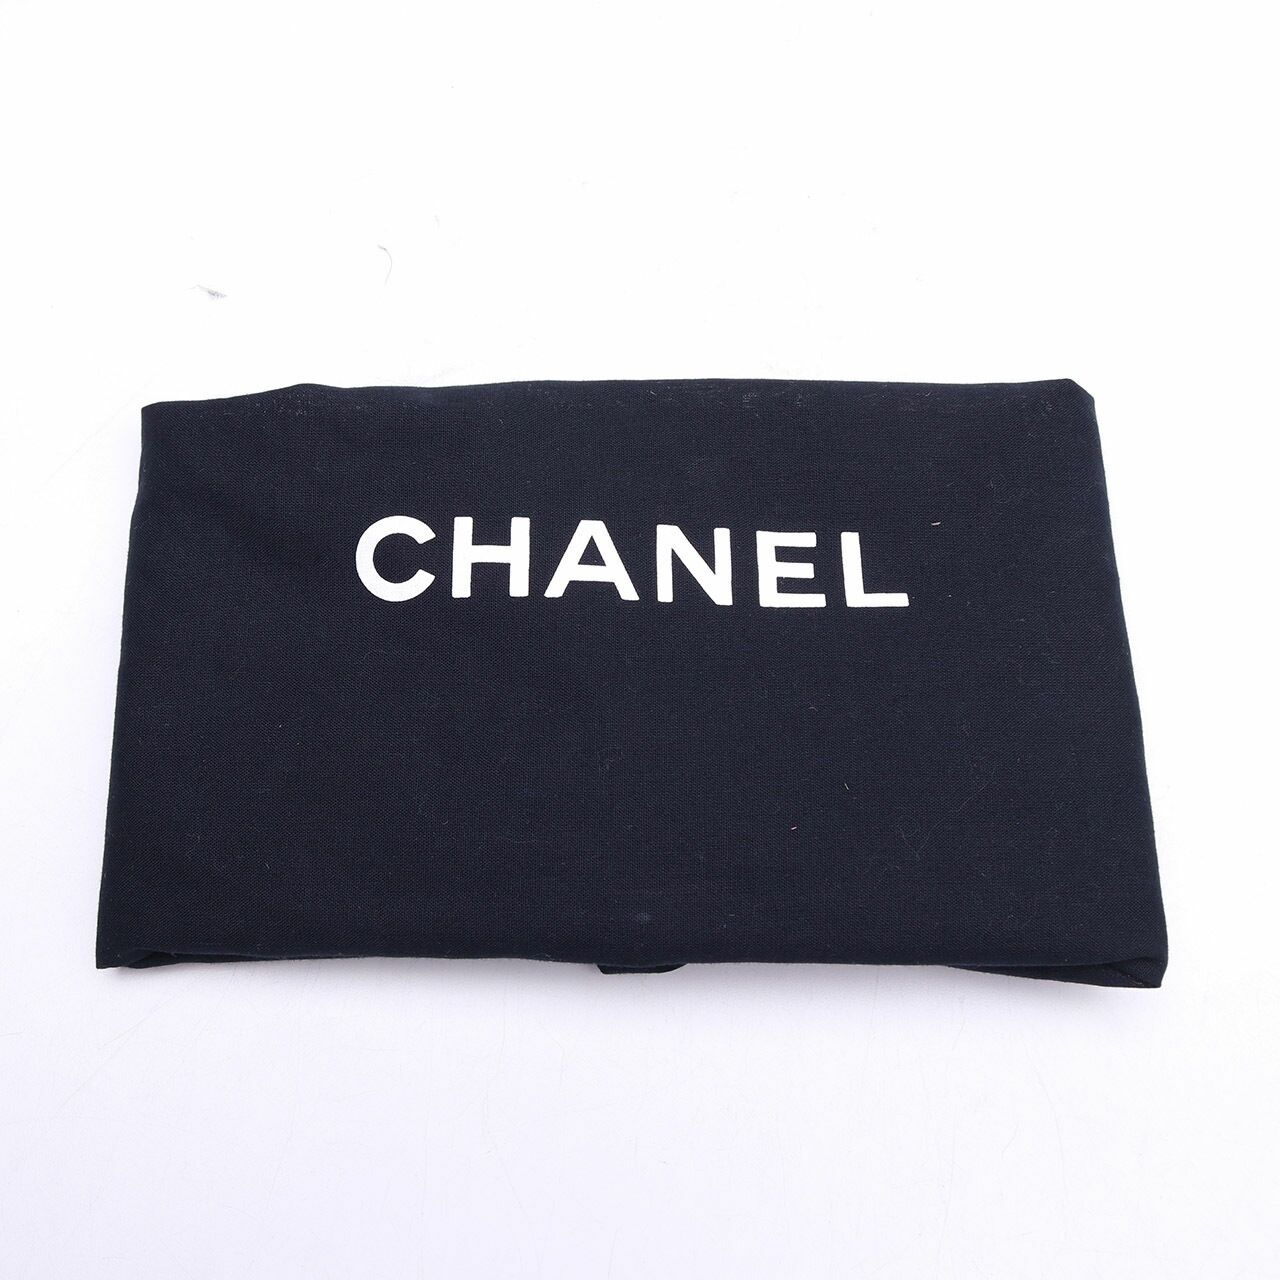 Chanel Caviar Large Black CC Logo Chain Shoulder Bag